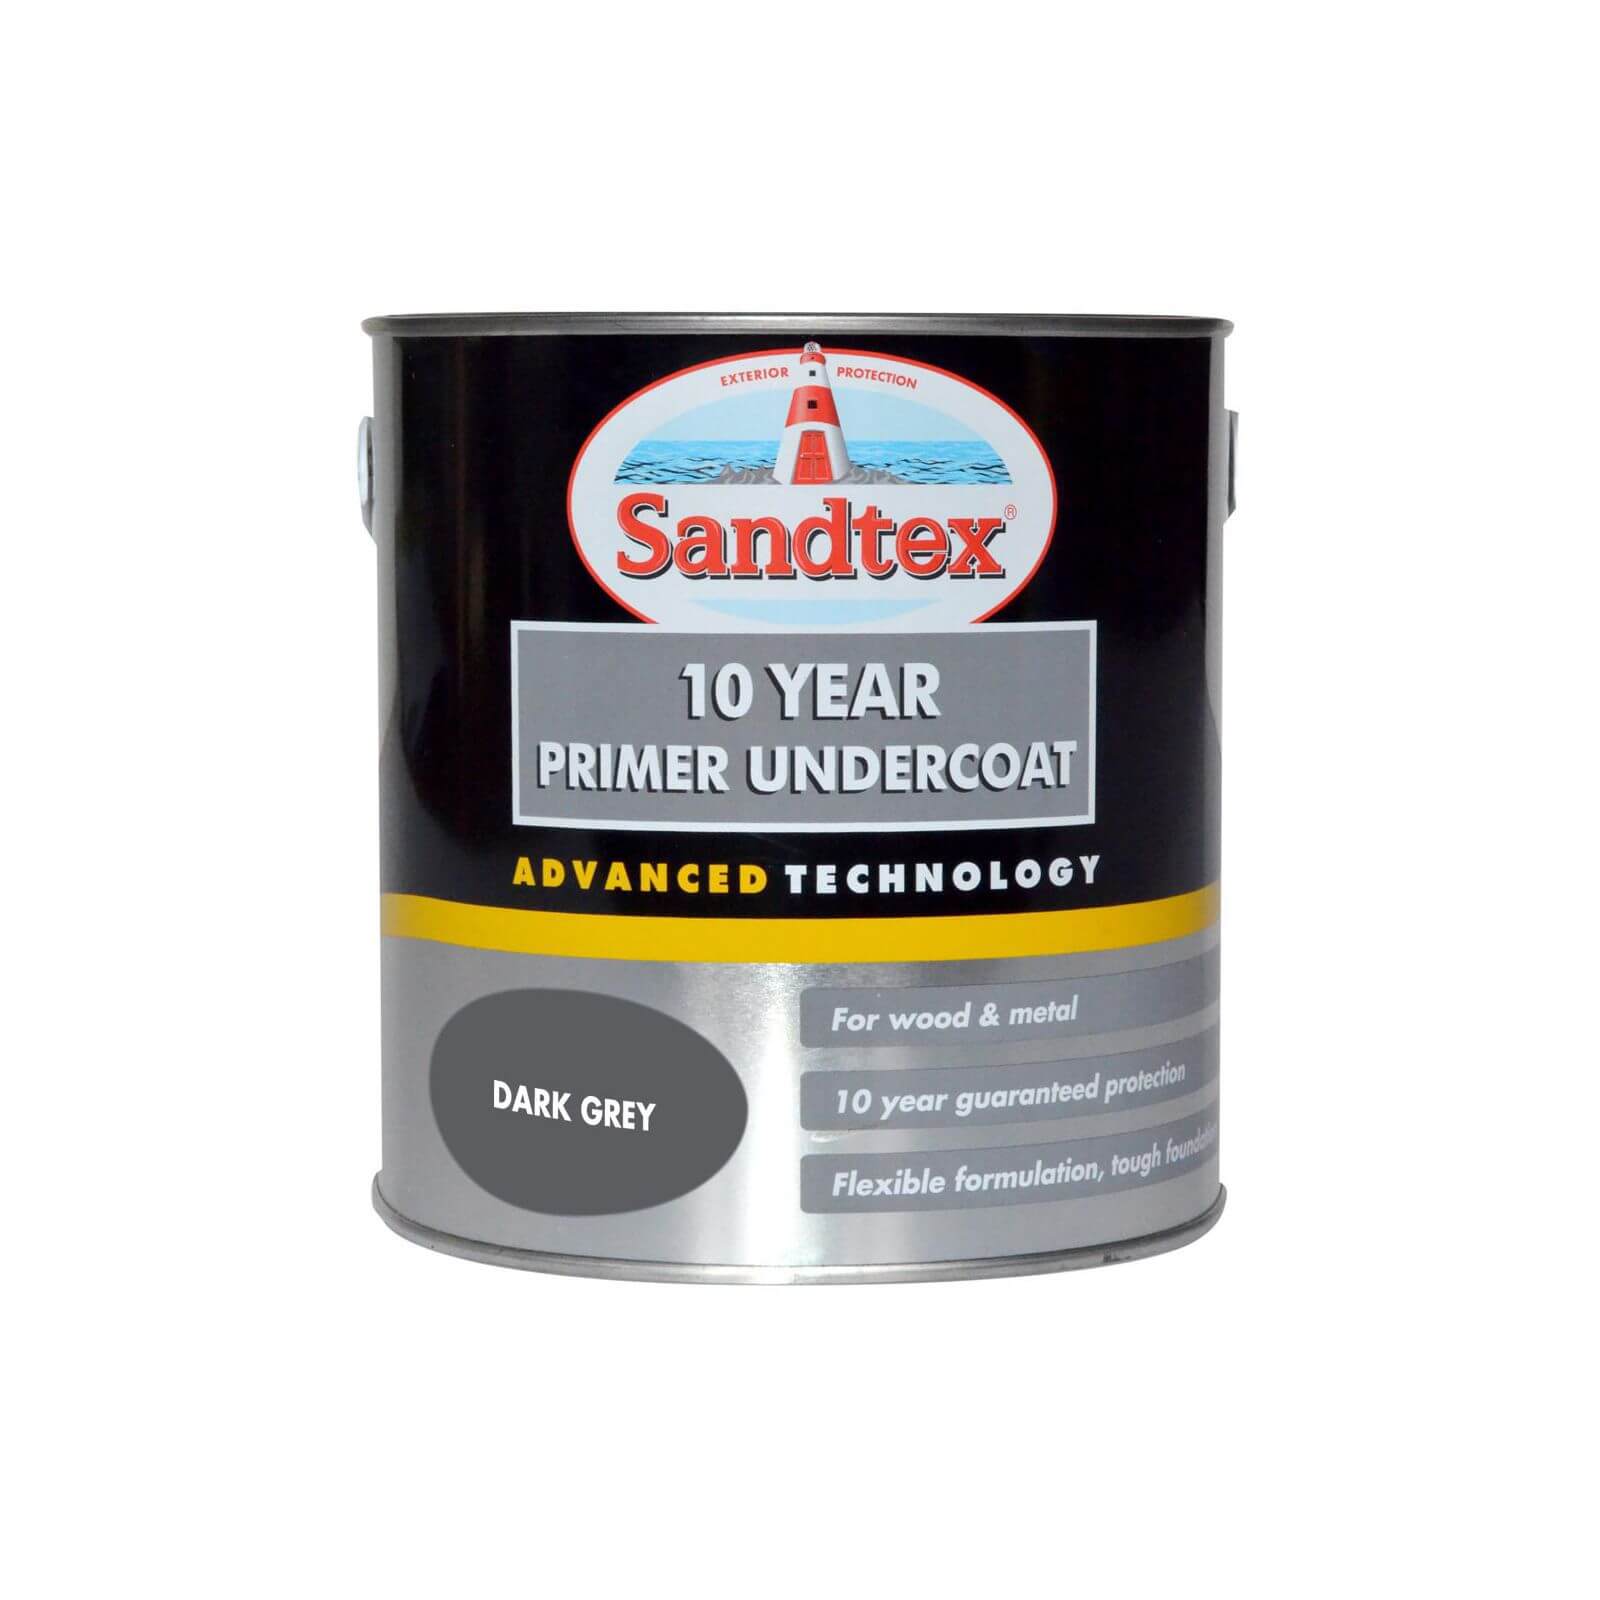 Sandtex 10 Year Primer Undercoat for Wood & Metal Dark Grey - 2.5L